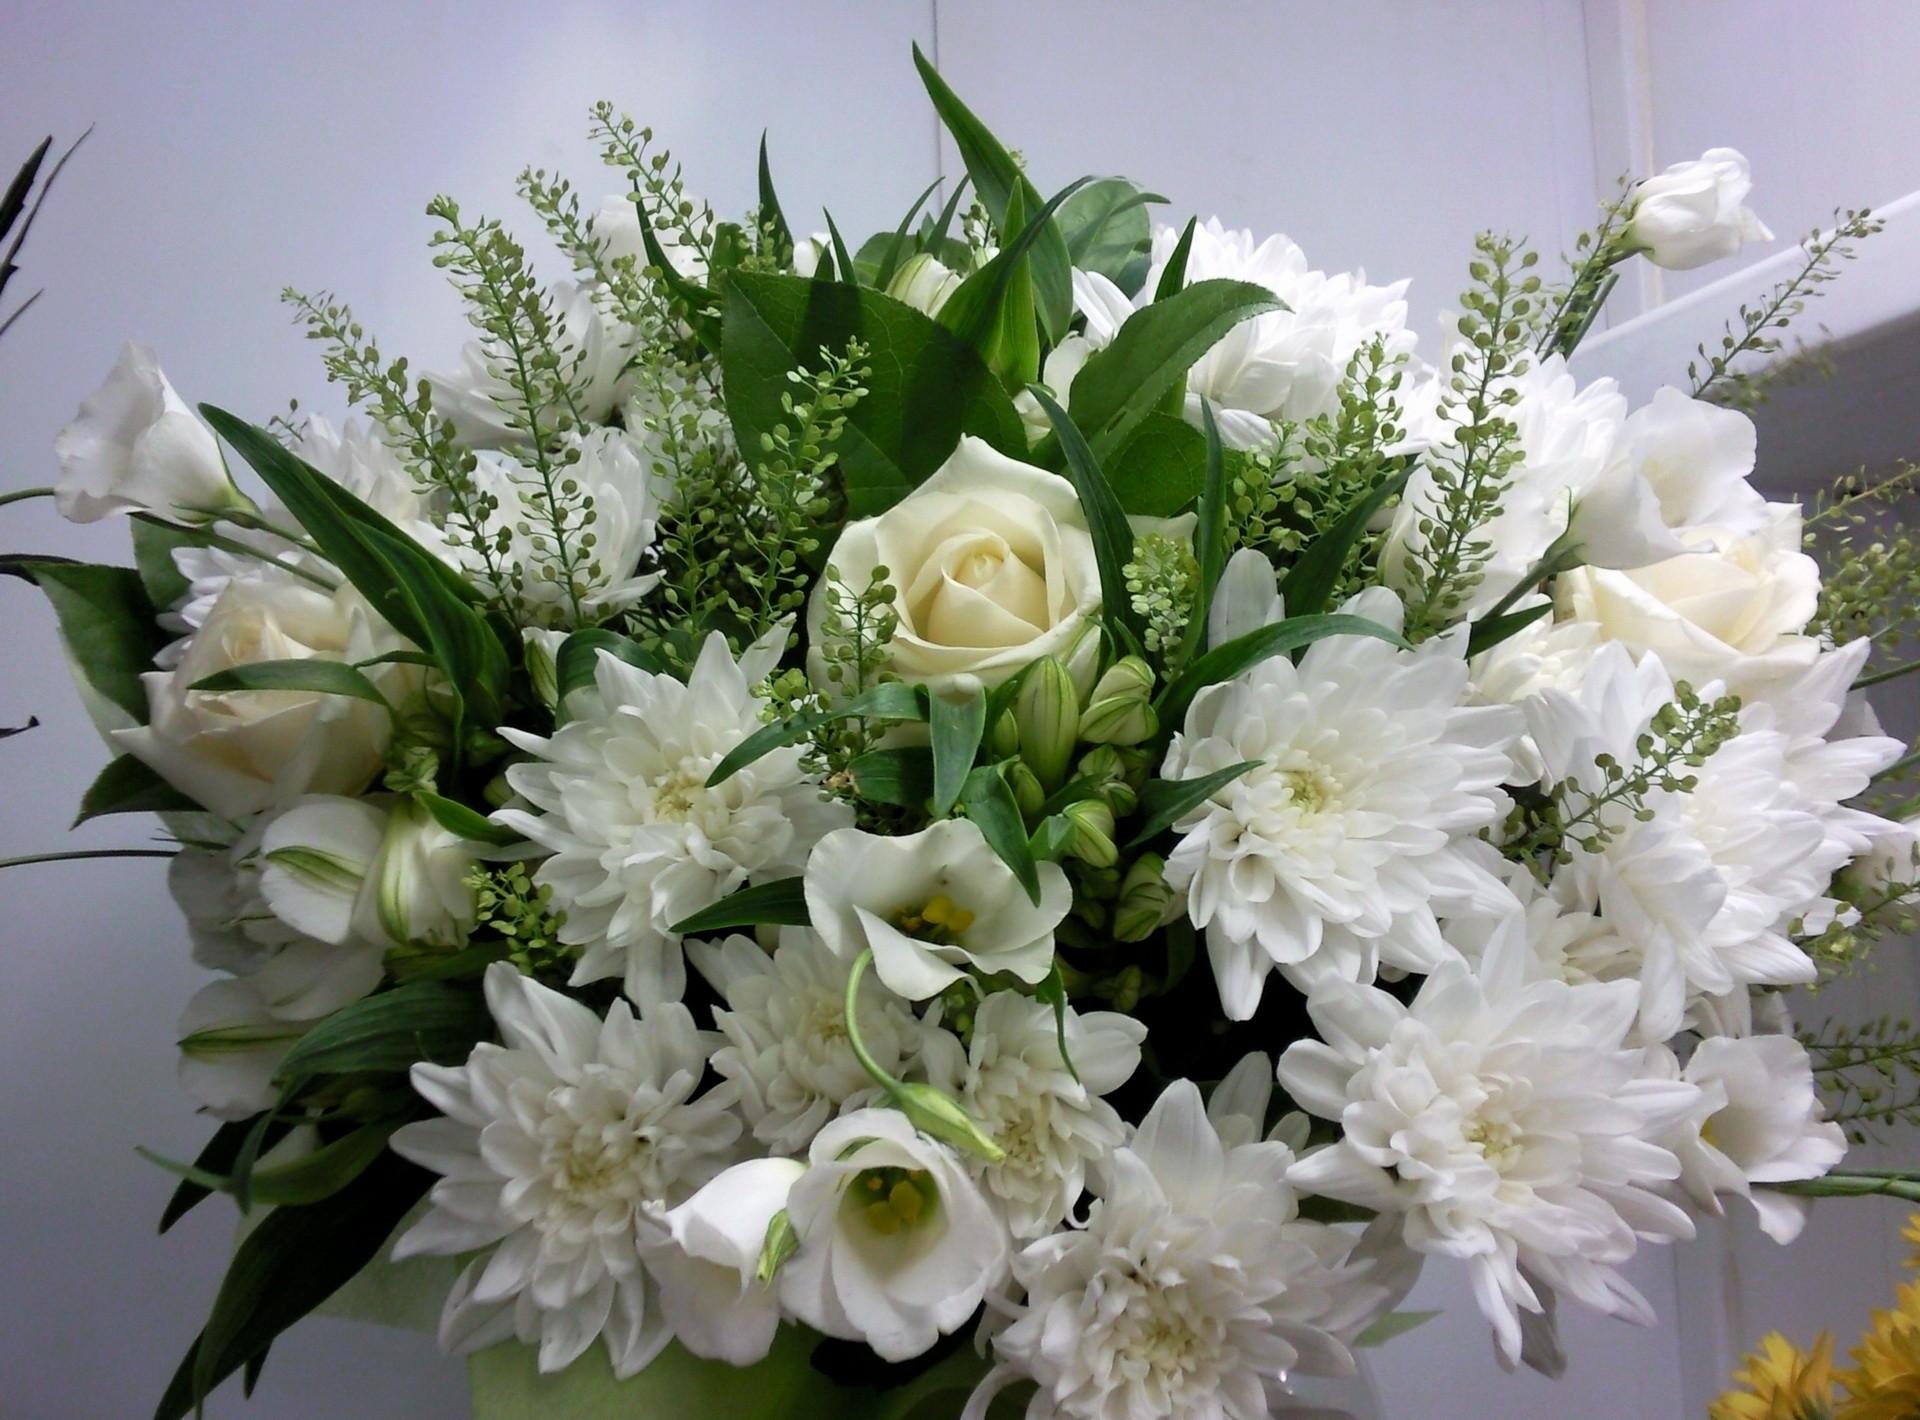 bouquet, roses, flowers, chrysanthemum, white, snow white wallpaper for mobile